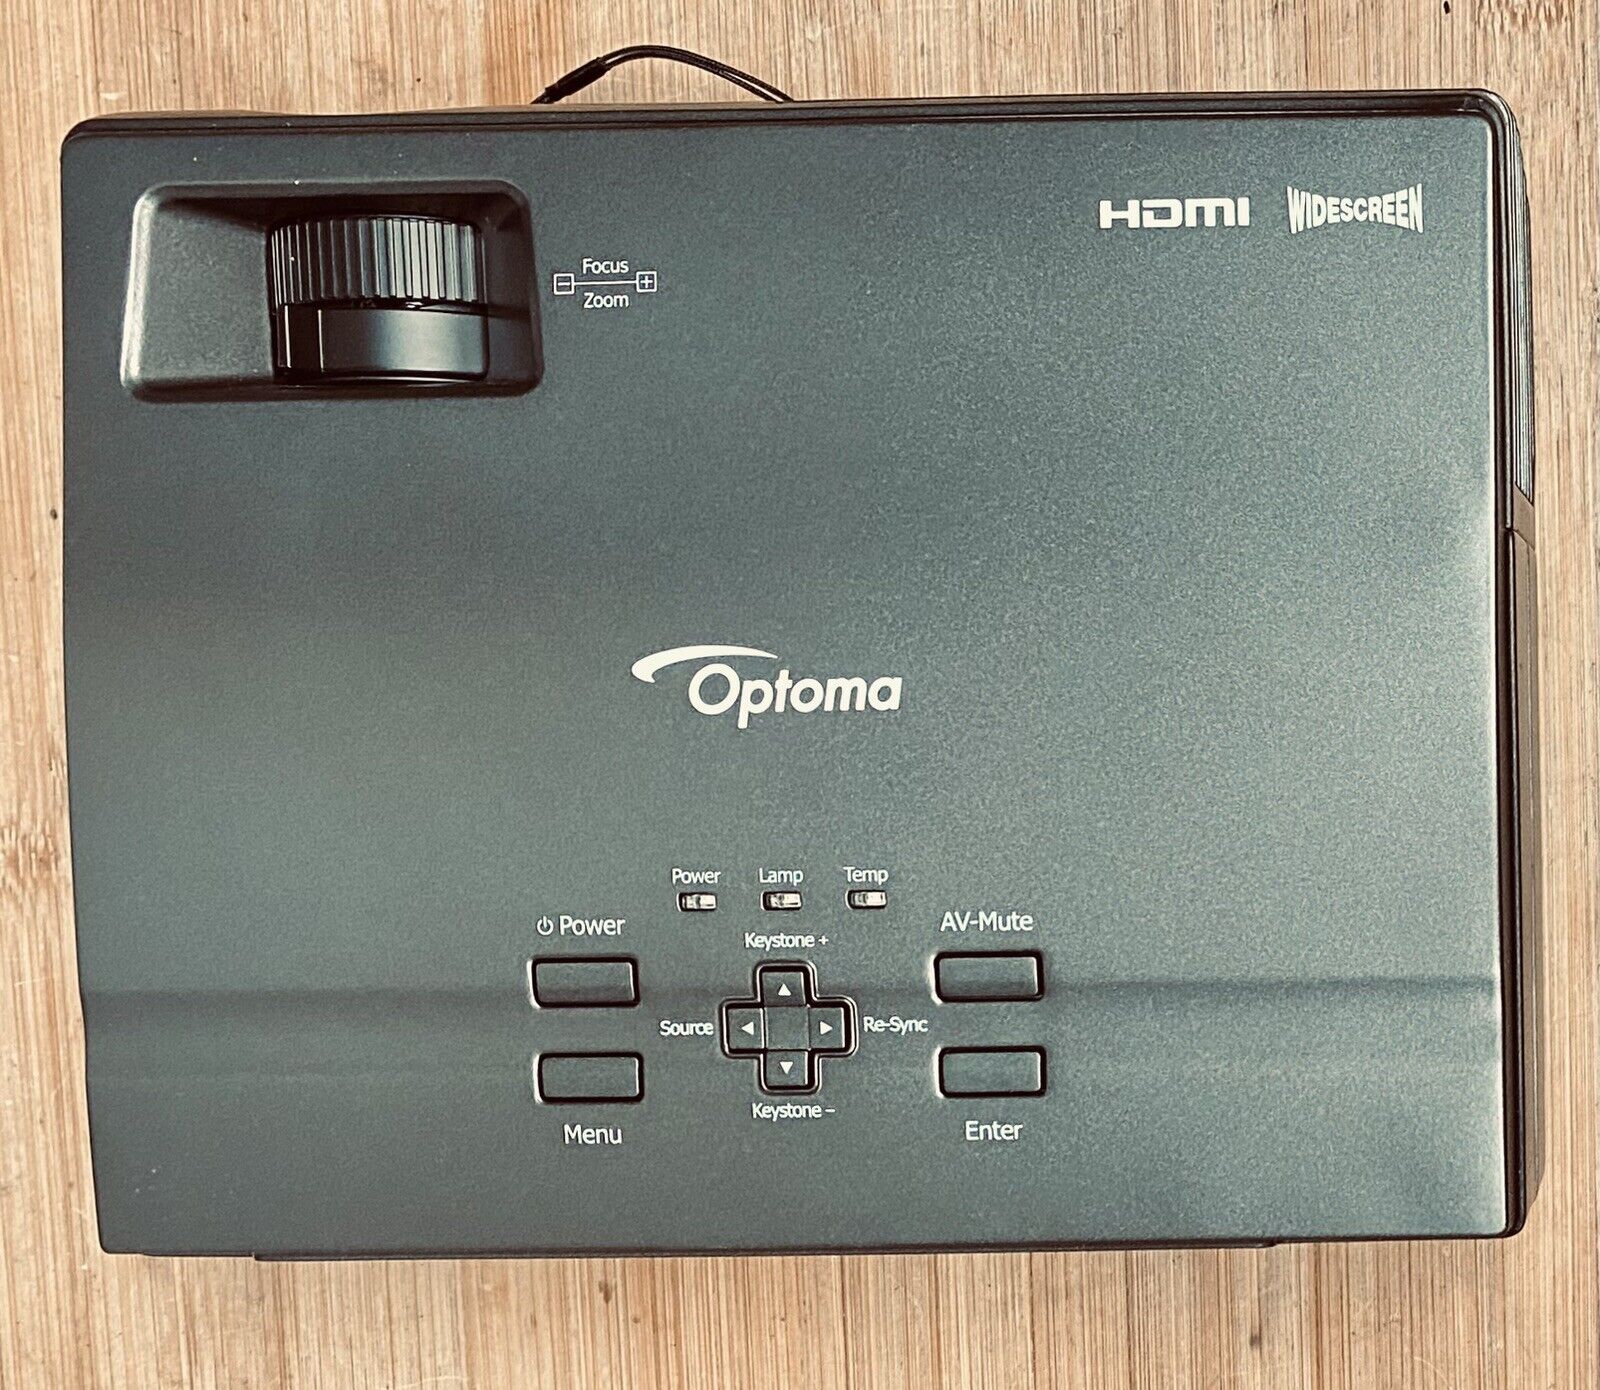 Optoma DAEPGLKGp Widescreen HDMI DLP Projector Tested